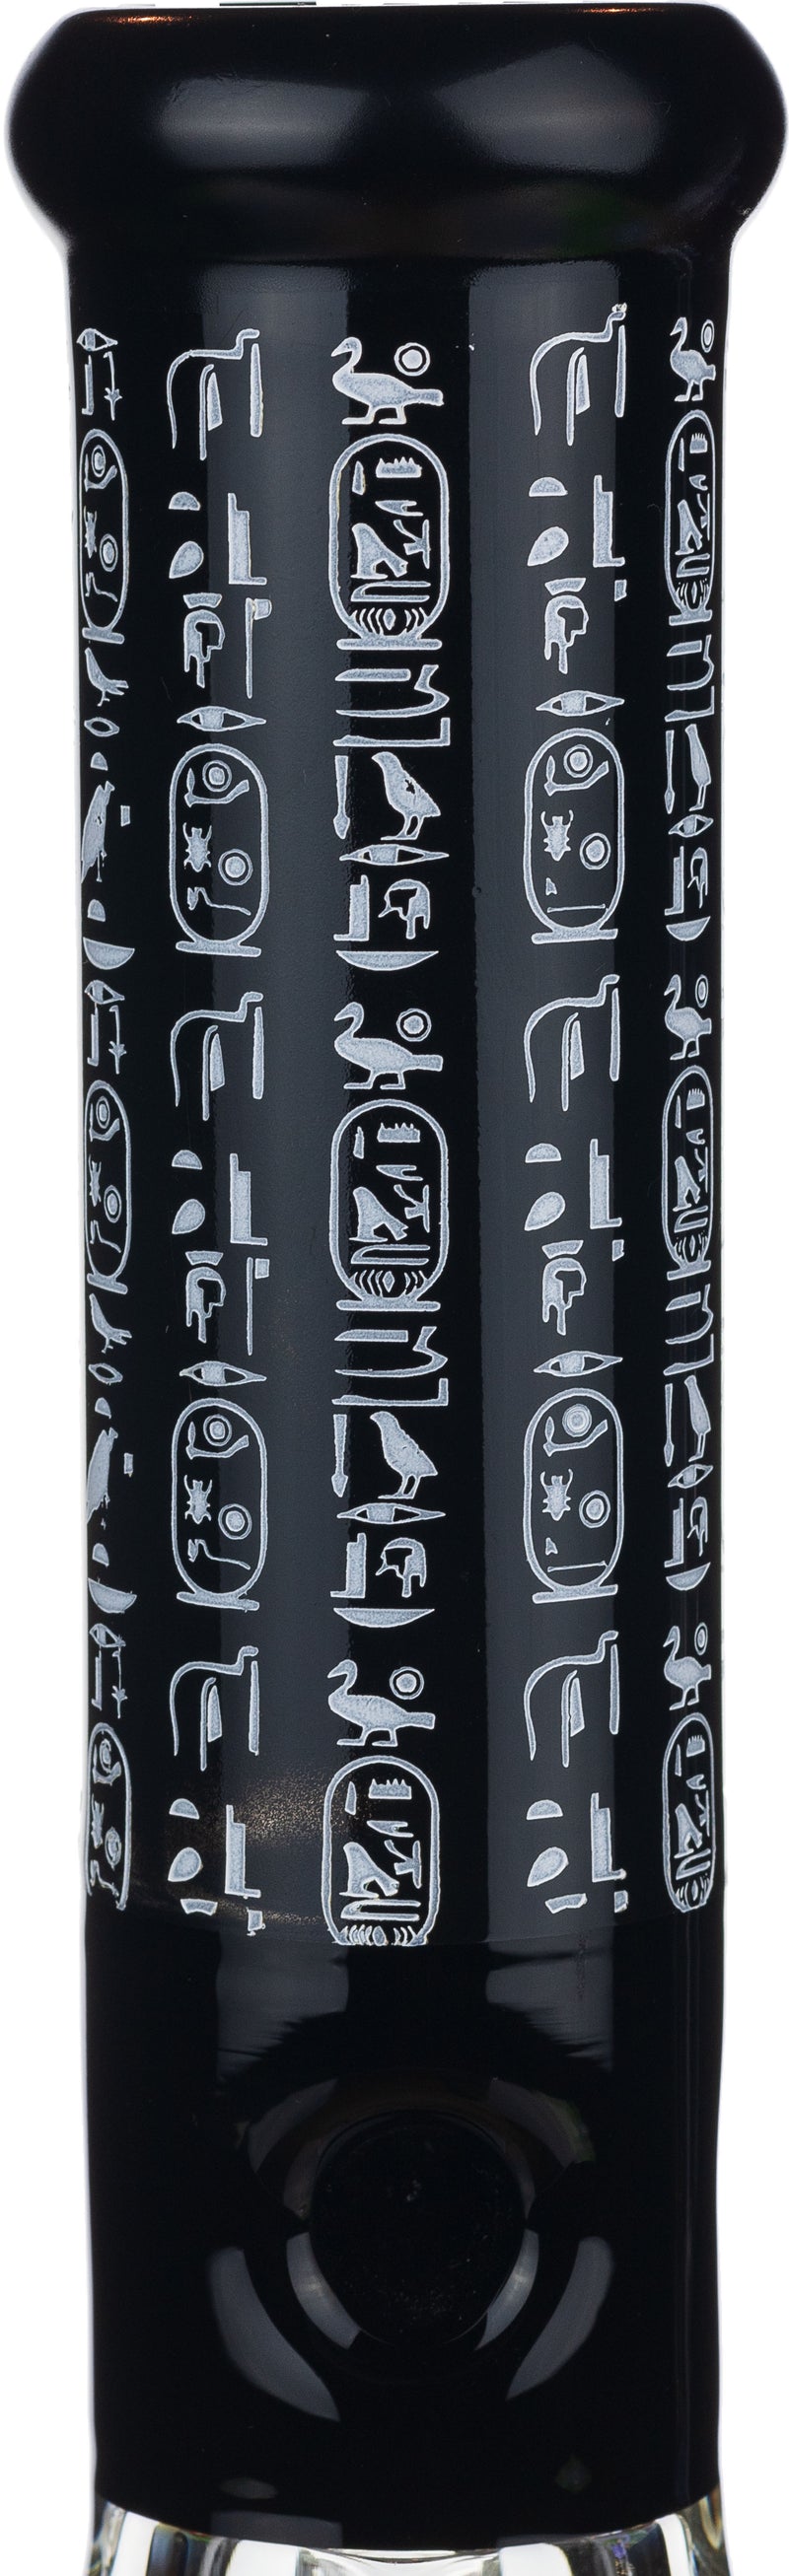 12" 7mm Beaker Bong with Egyptian Hieroglyphs Designs, by Diamond Glass - Bat Kountry